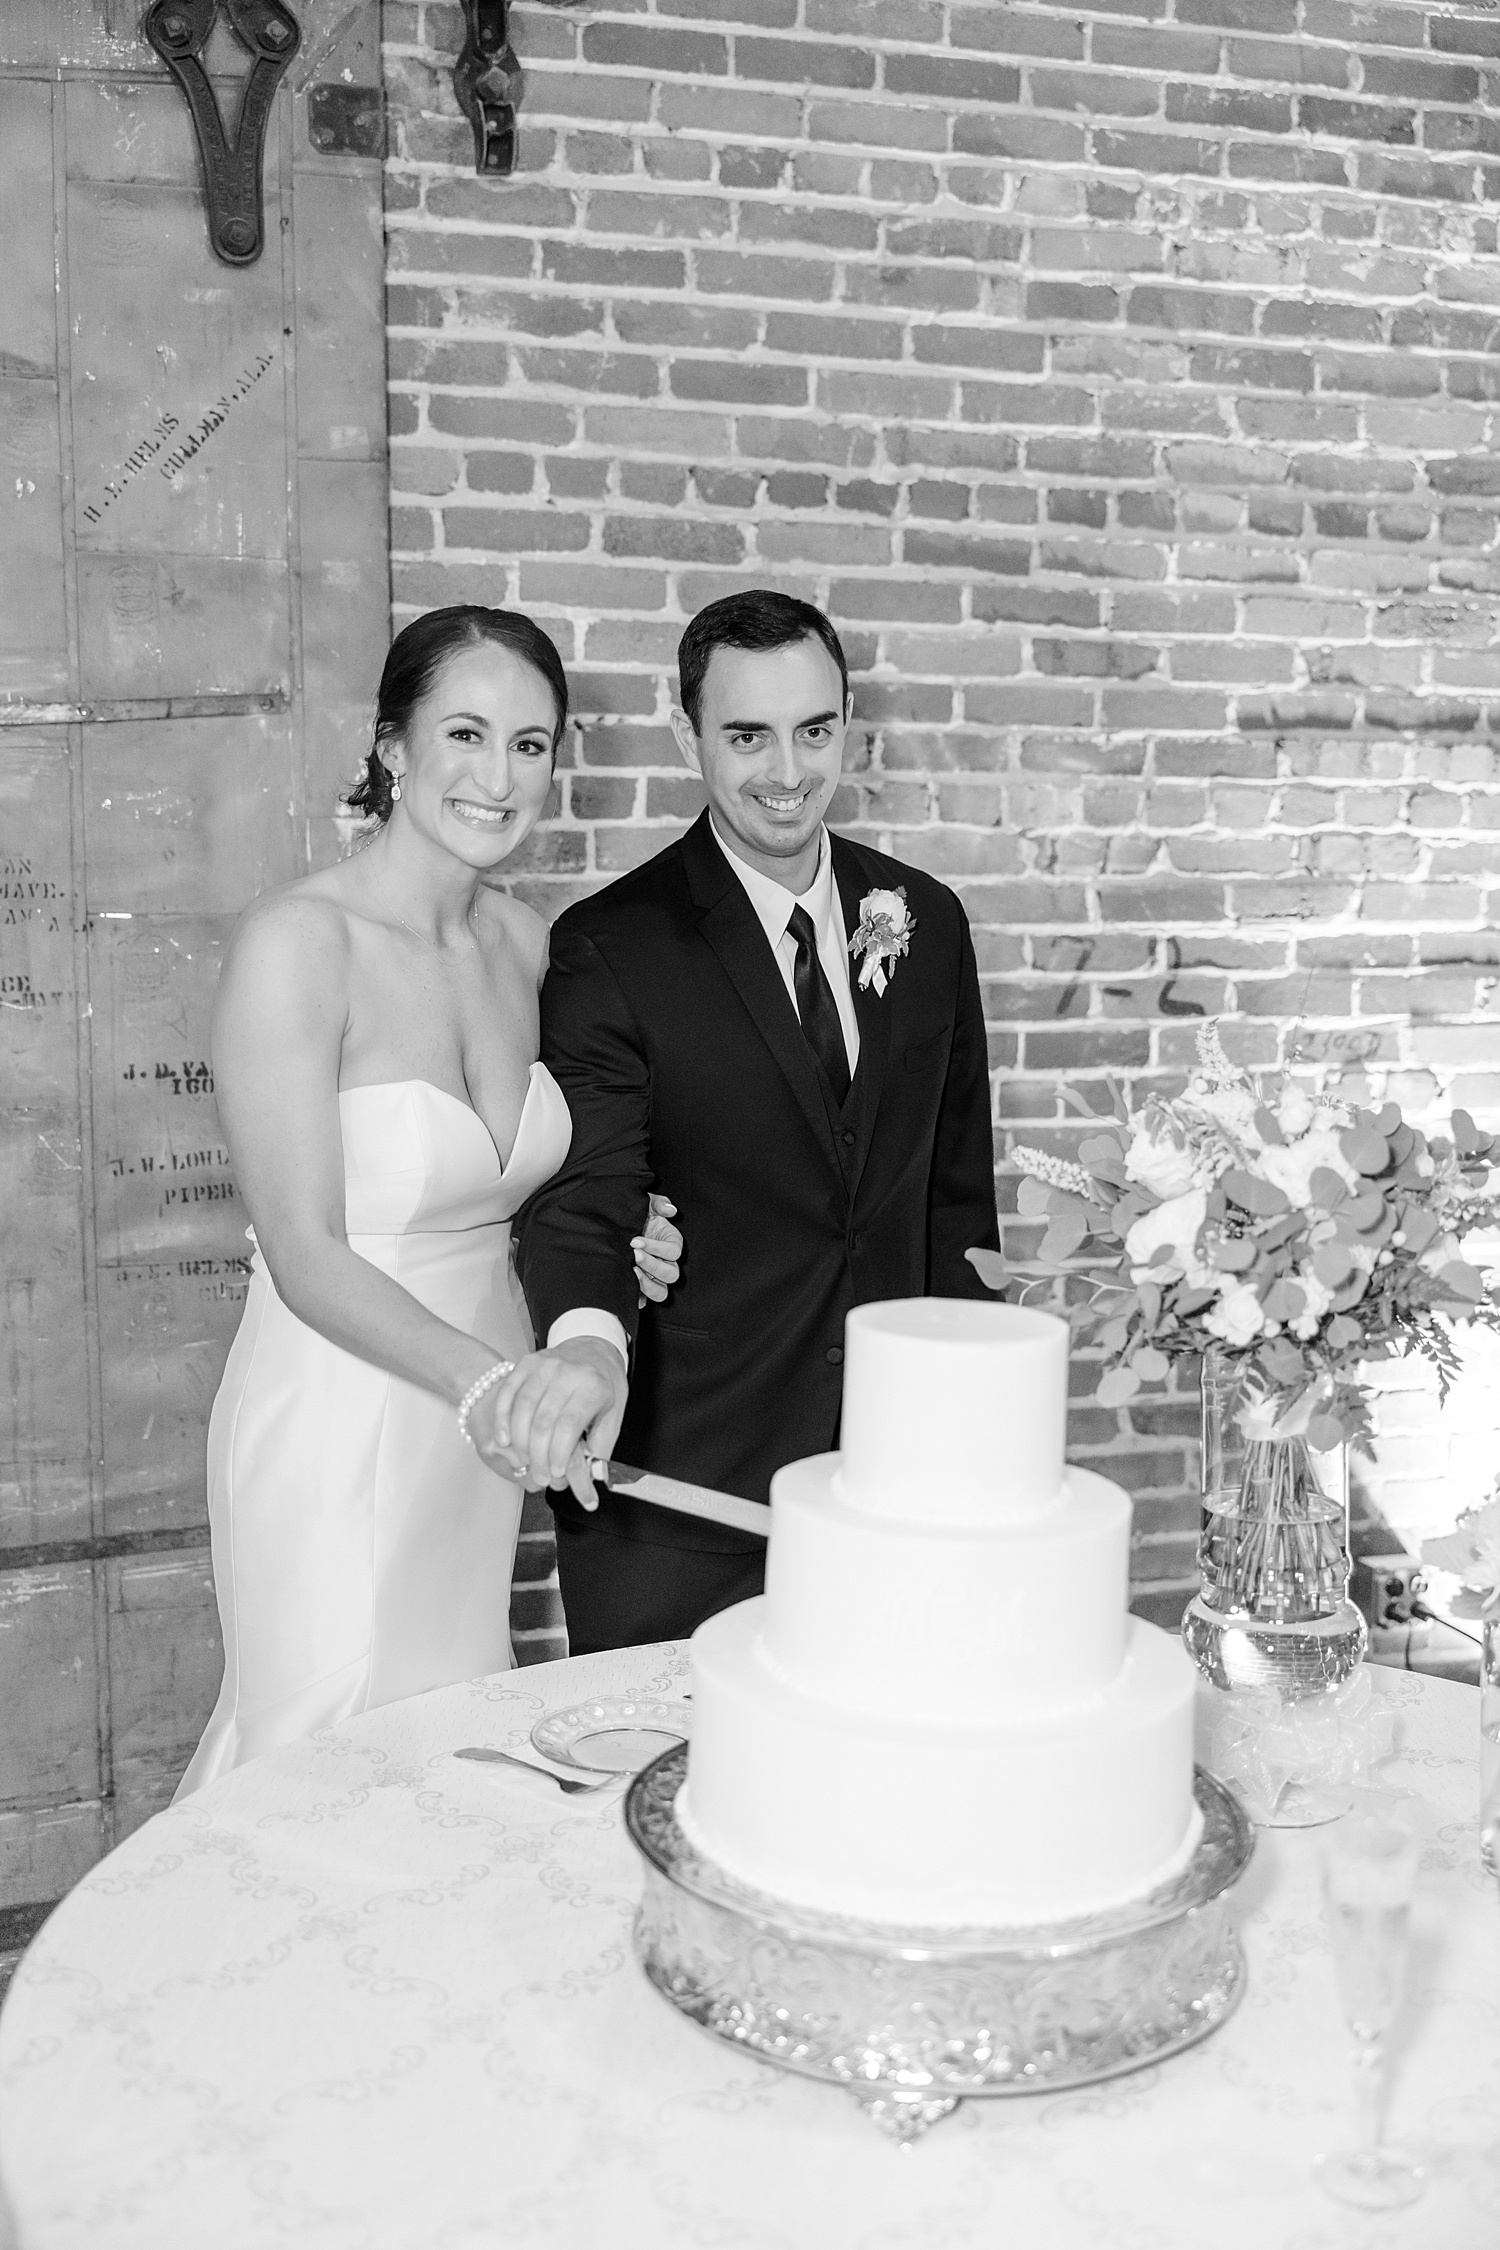 couple cut their wedding cake